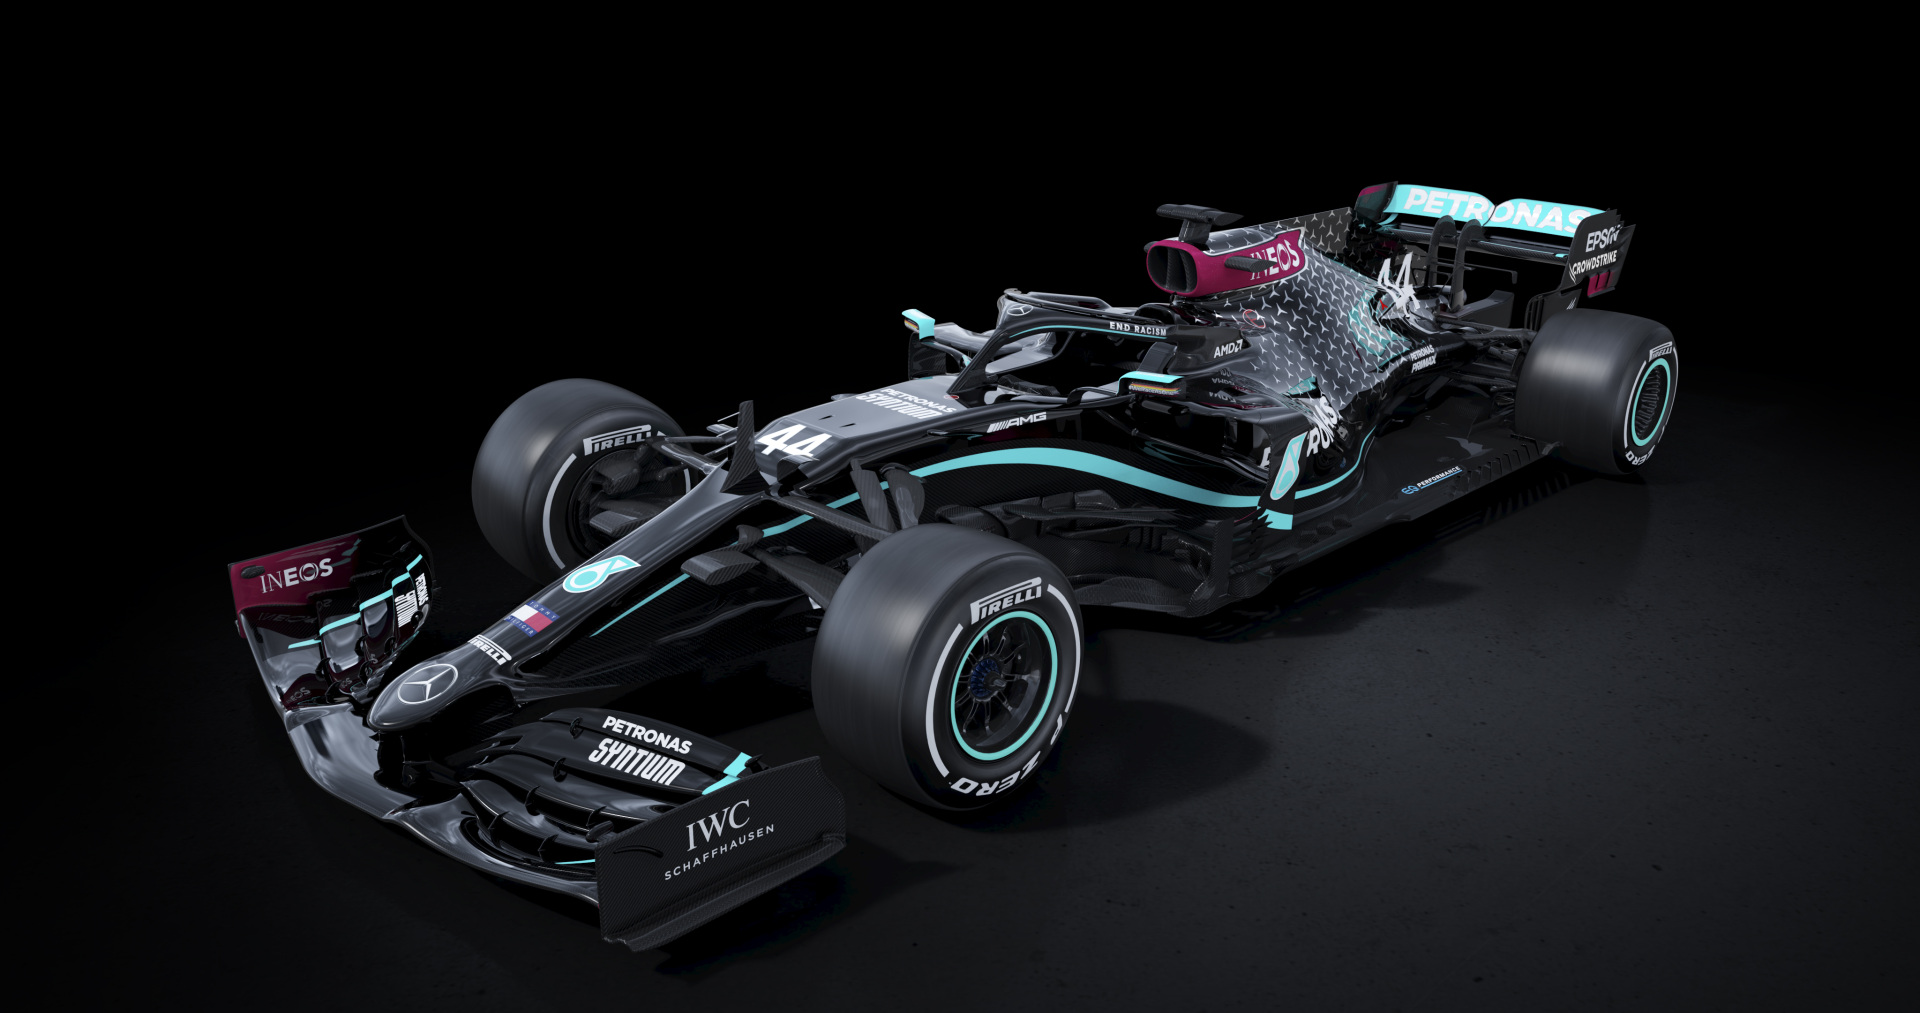 Silver Arrows return to racing with renewed purpose. Lewis Hamilton's F1 car.